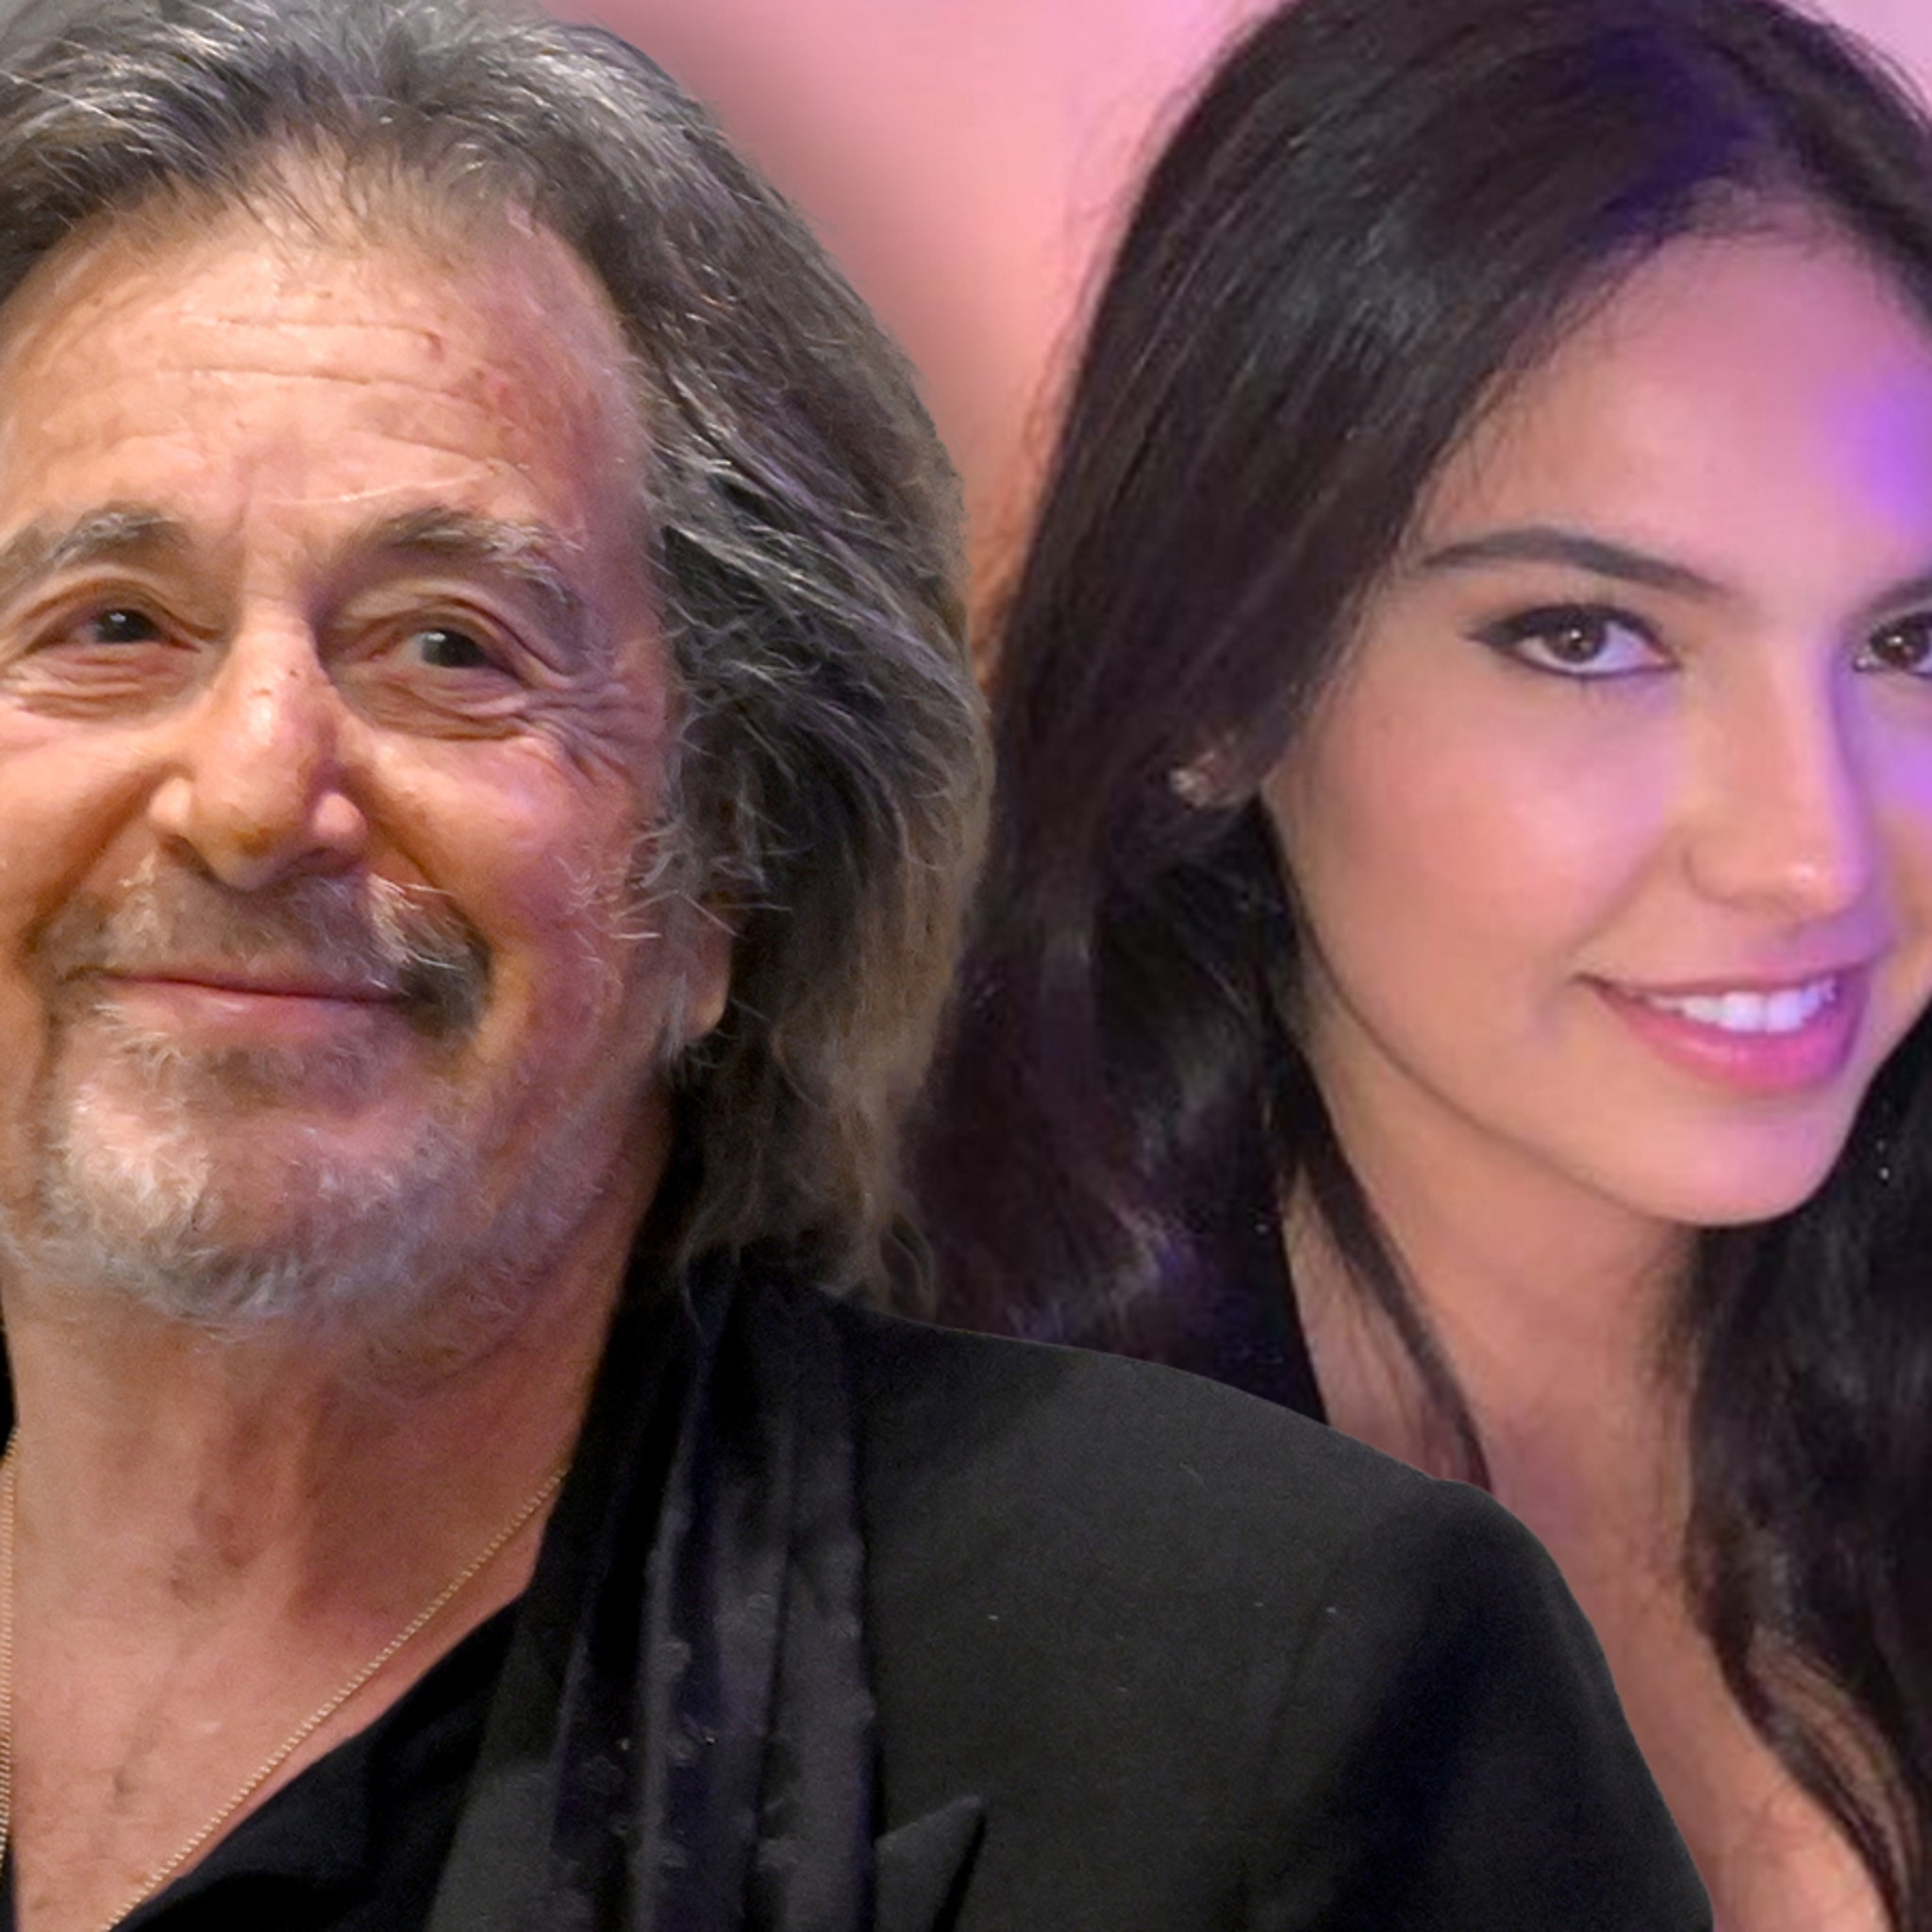 Al Pacino, 83, Surprised By 29-Year-Old Girlfriends Pregnancy image